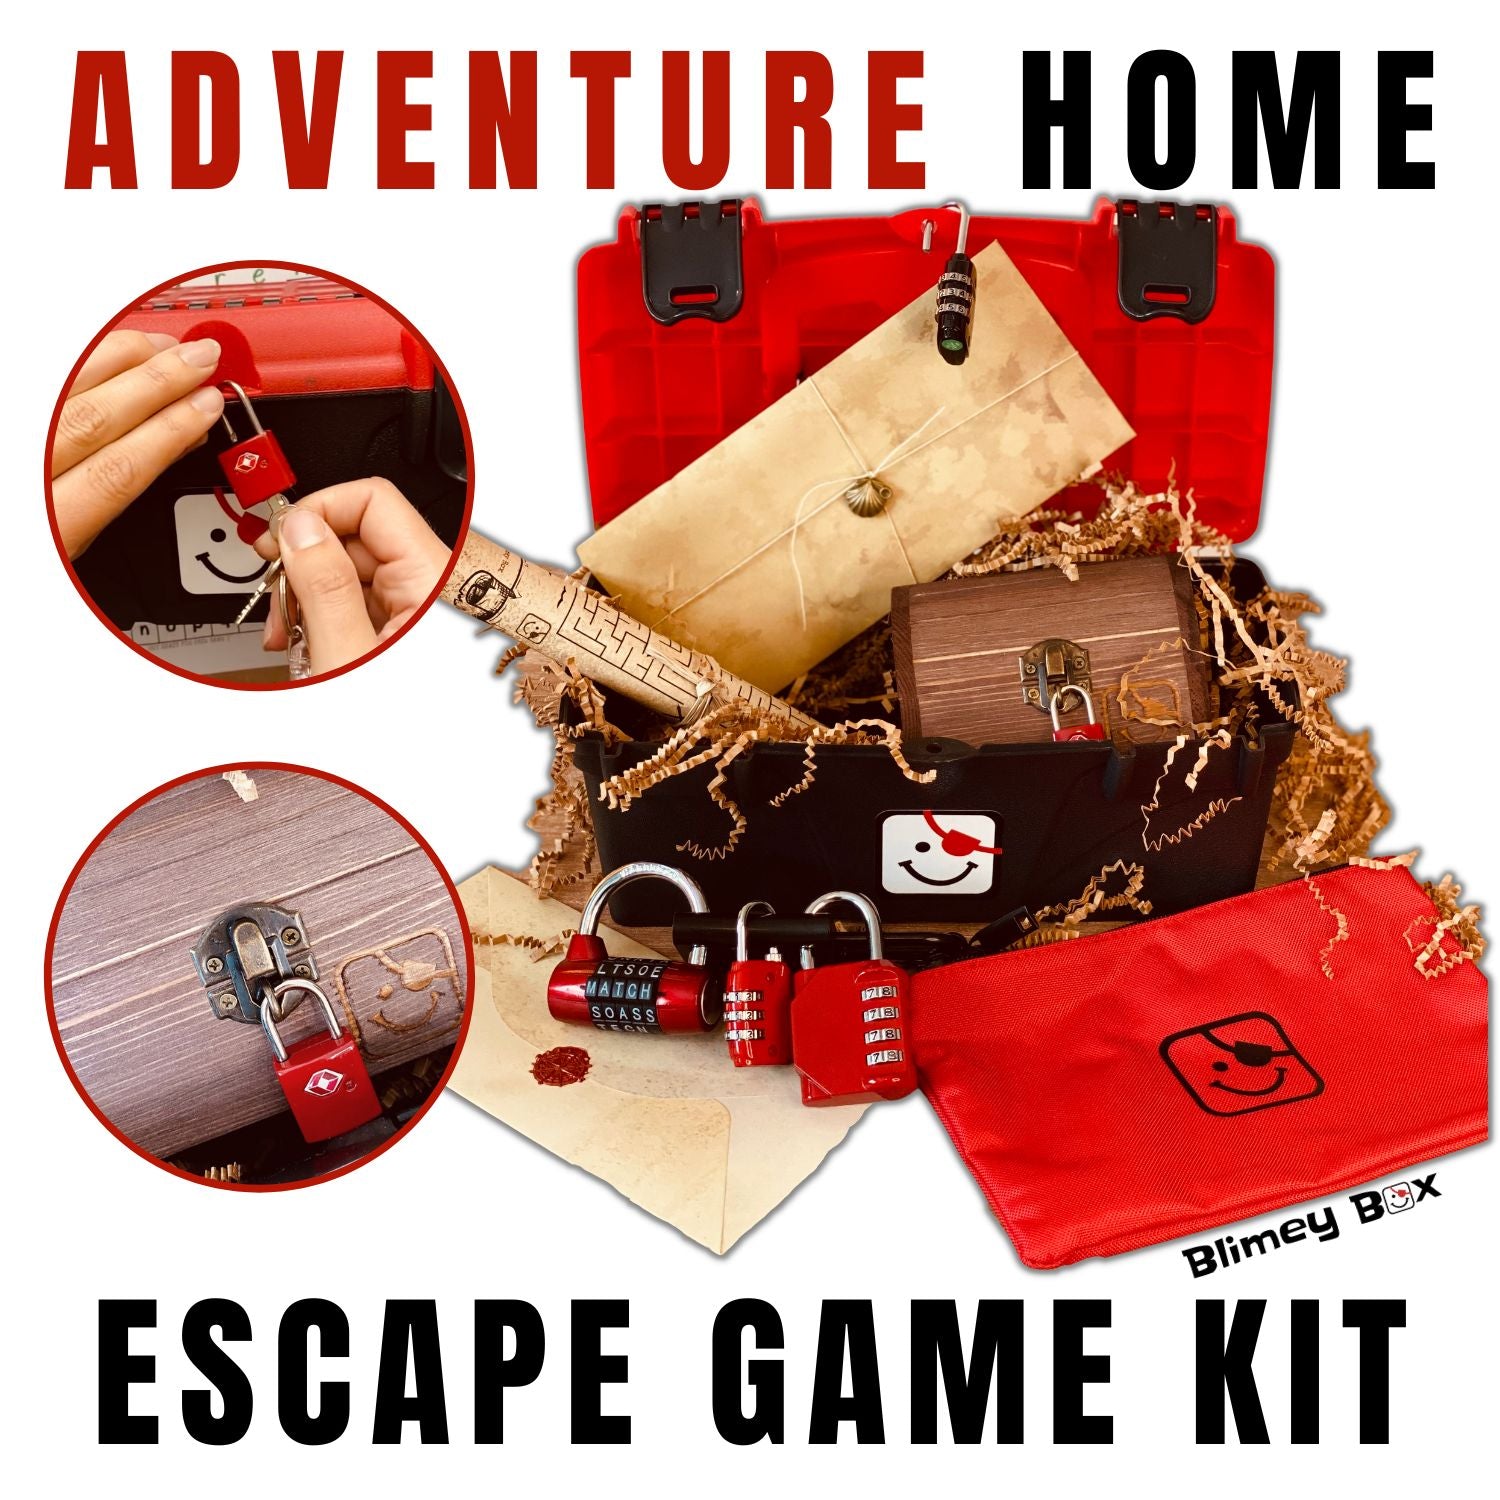 Adventure Home Escape Game Kit for Kids (8-13) Blimey Box